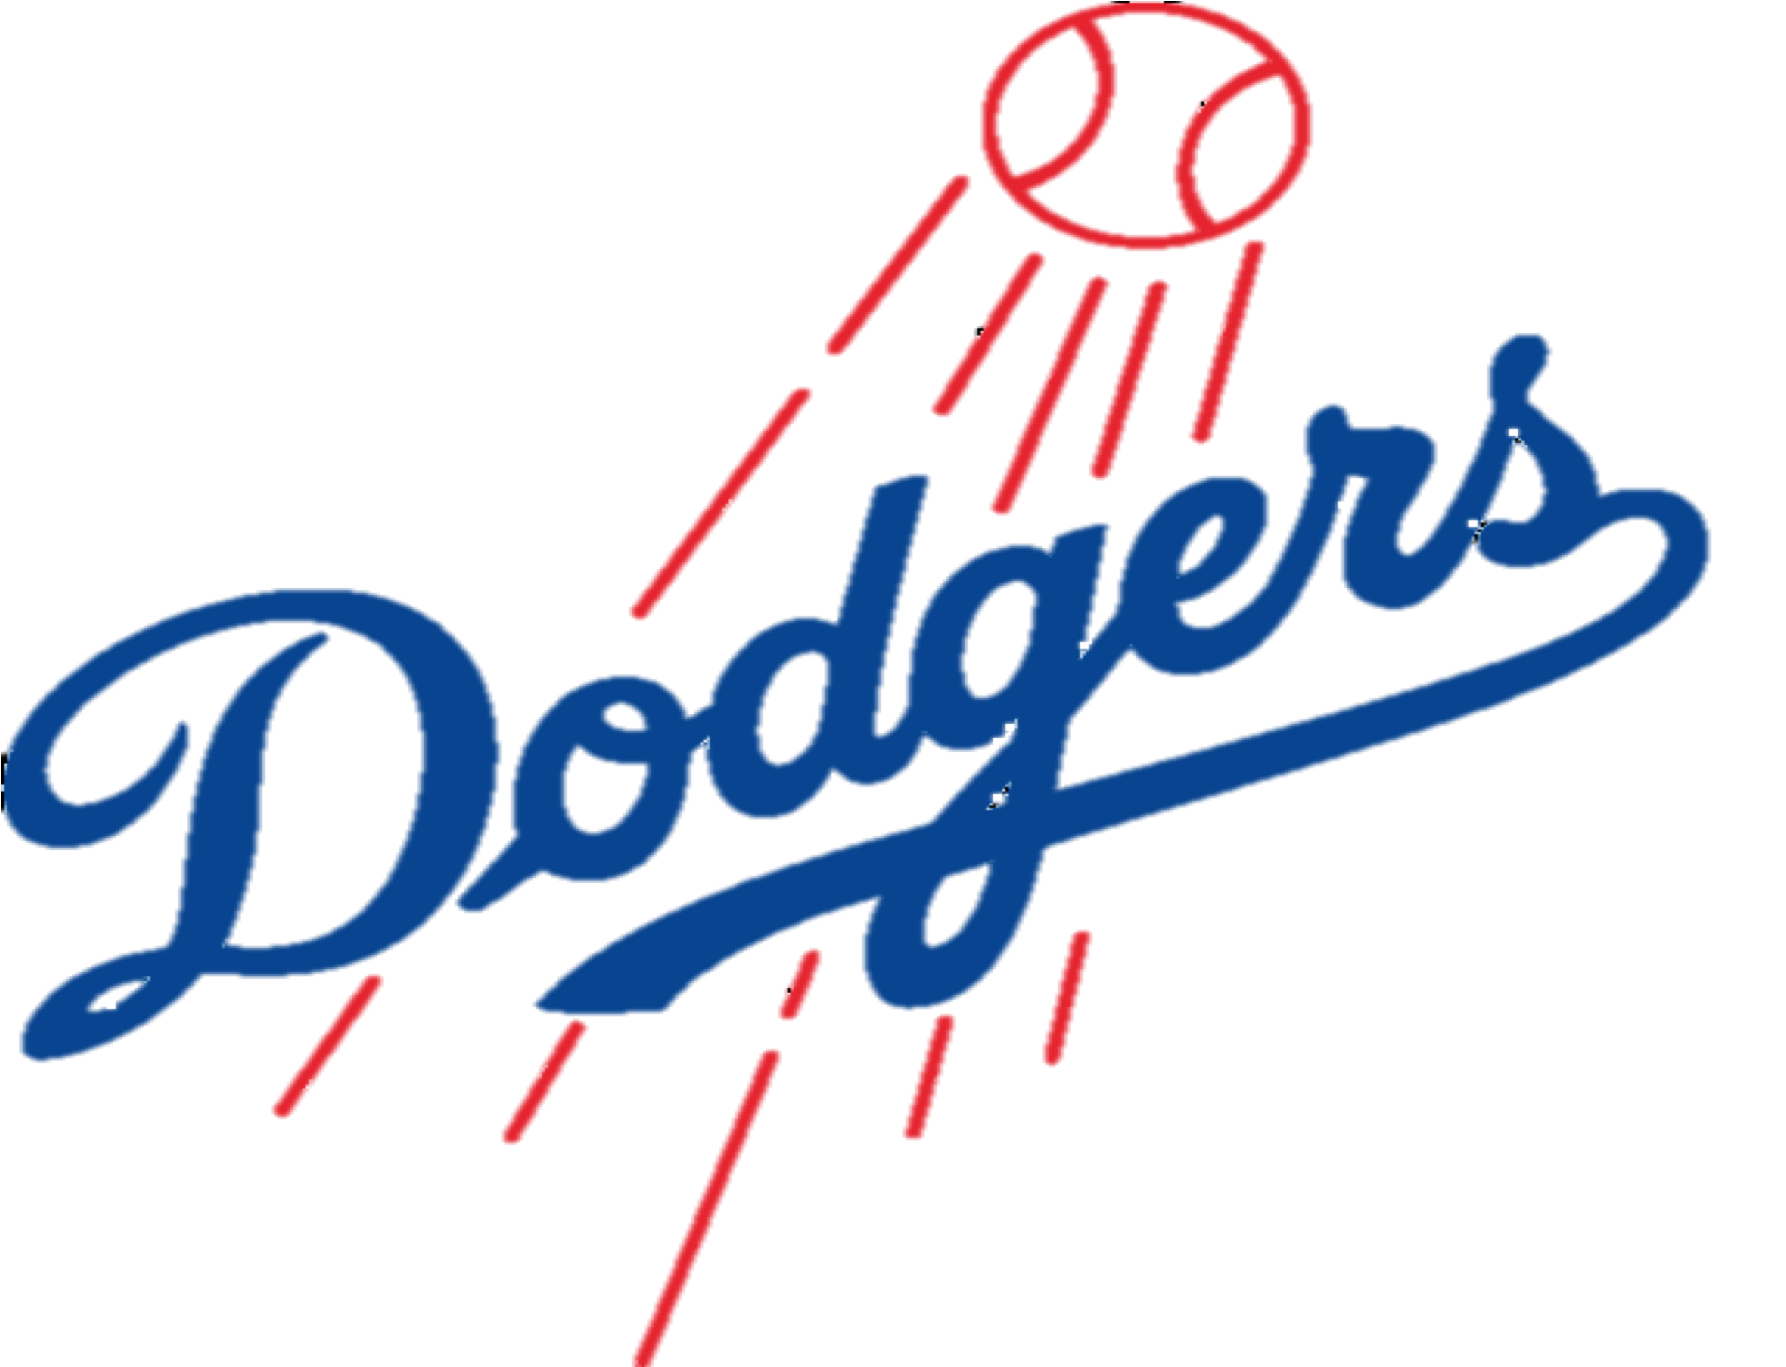 Wallpaper Dodgers Logo Wallpapers